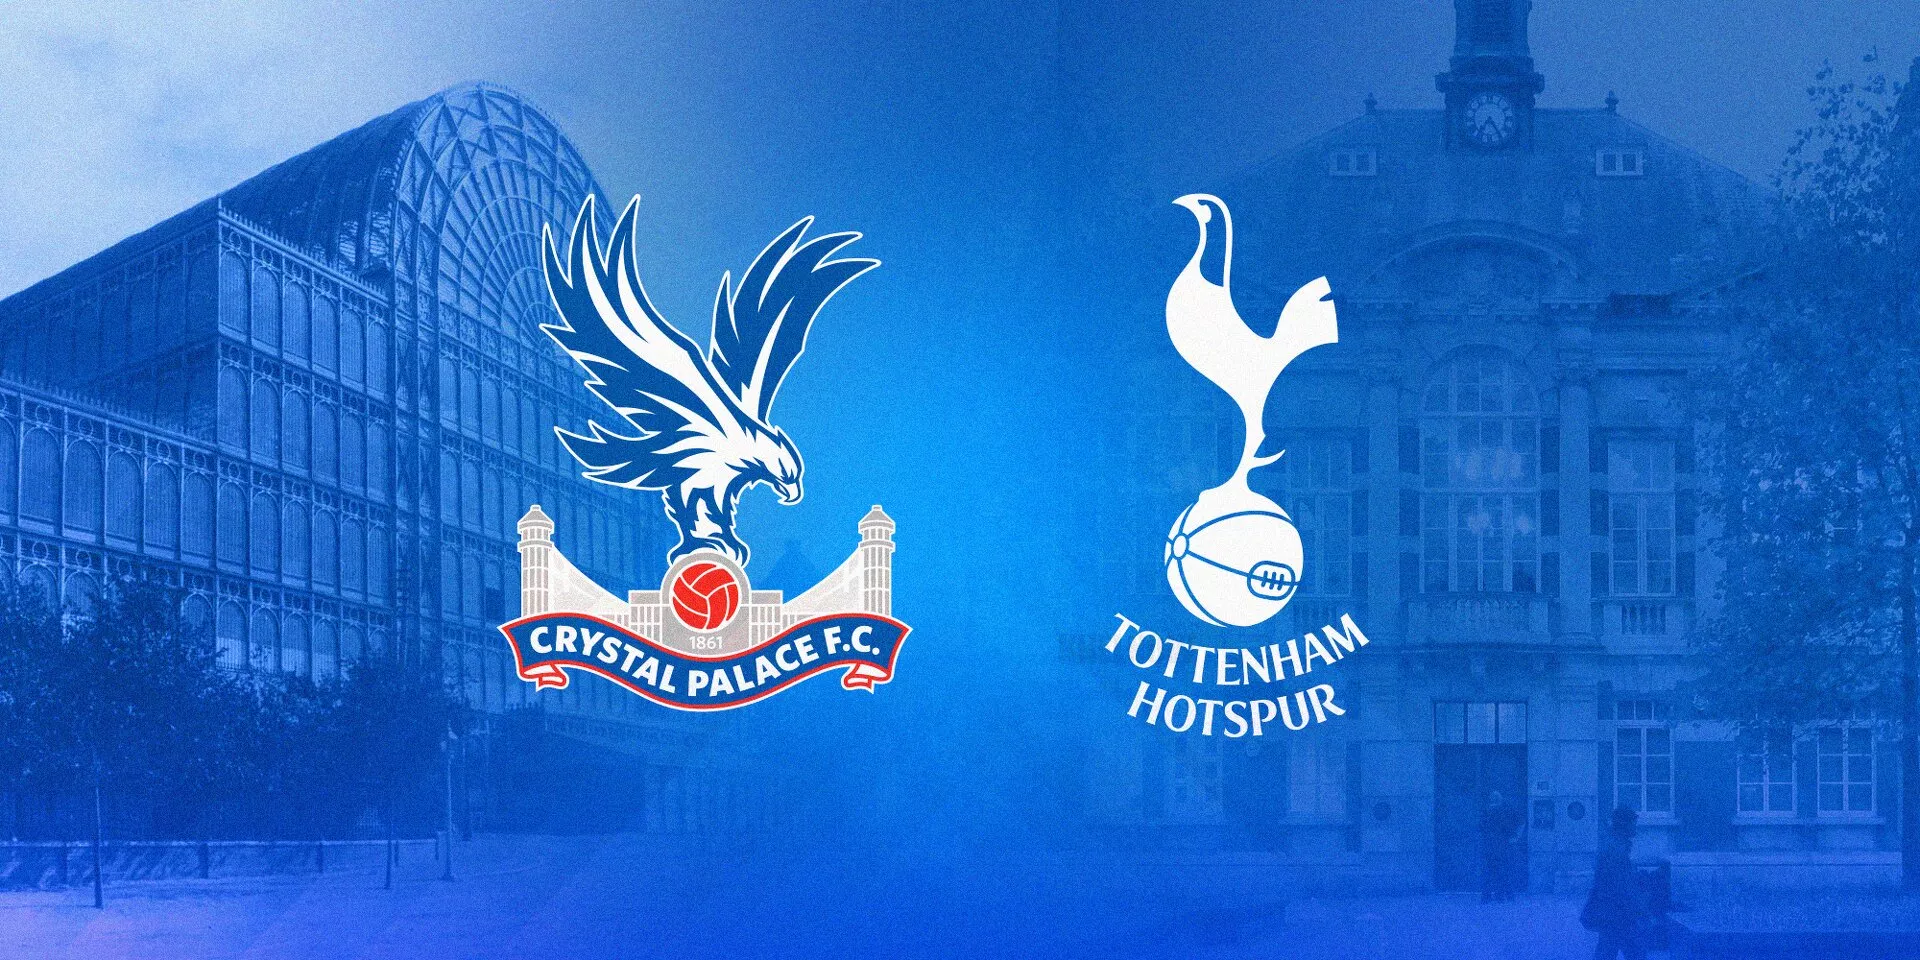 Tottenham Hotspur v. Crystal Palace